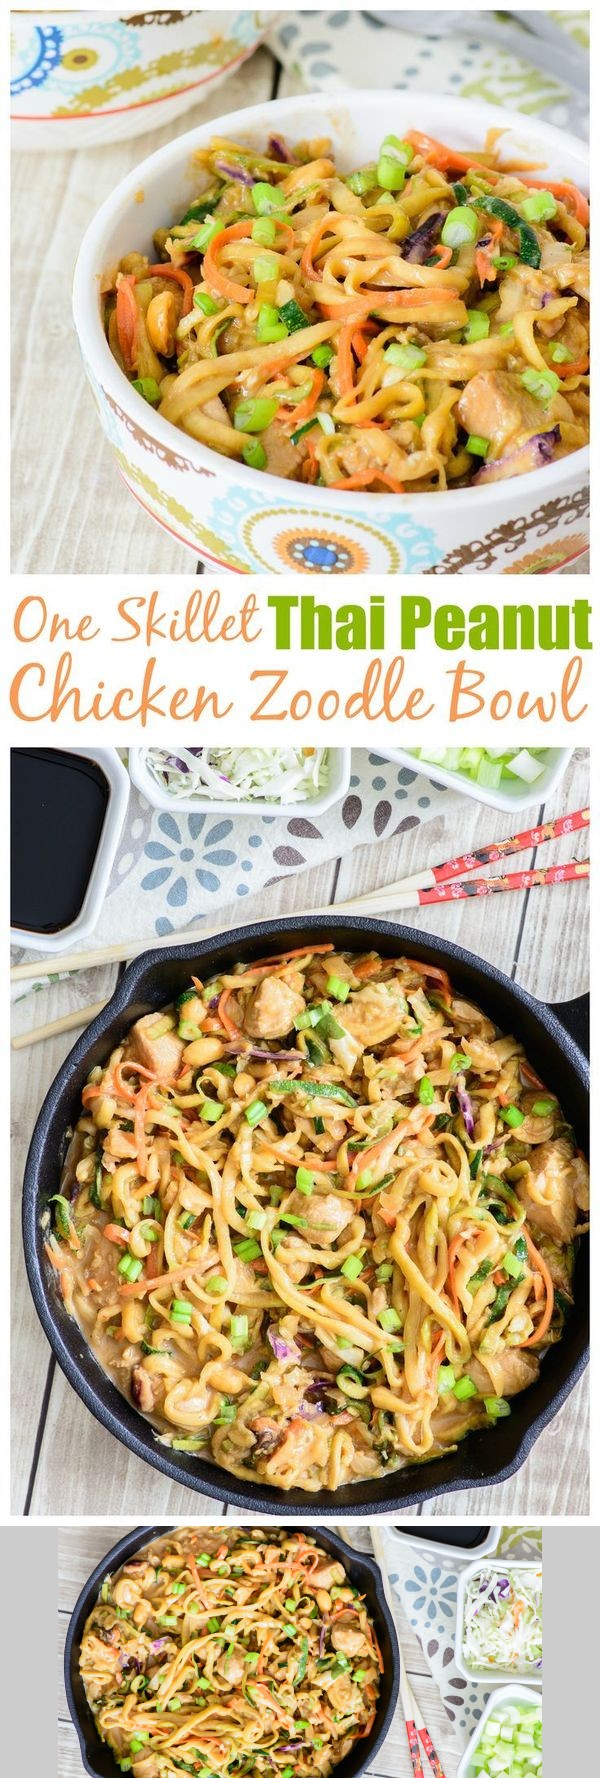 Thai Peanut Chicken Zoodle Bowl